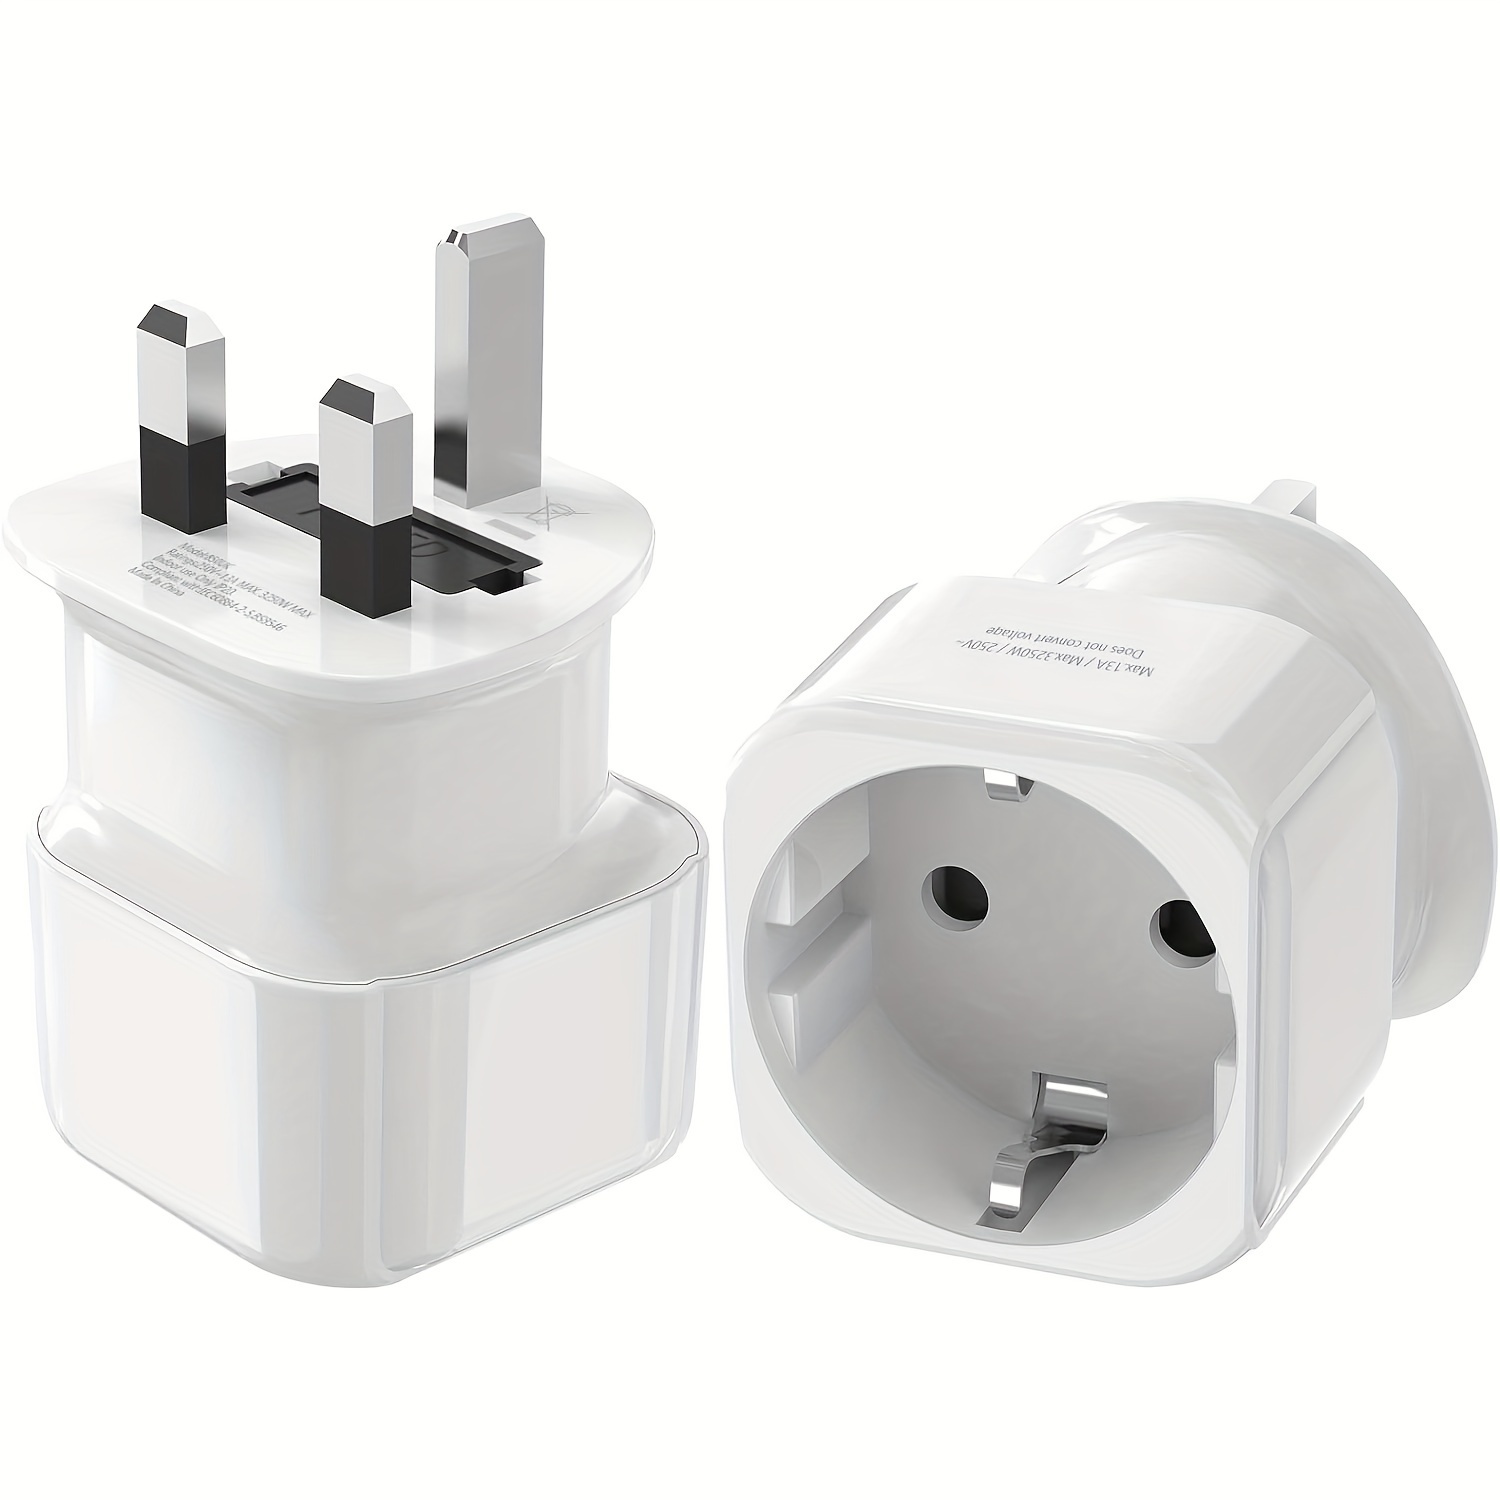 2 Pack European to US Plug Adapter,UK to US Plug Adapter, Universal to US  Travel Plug Adapter, Suitable for EU/UK/AU/CN/JP/Italy/Israel Plug Adapter